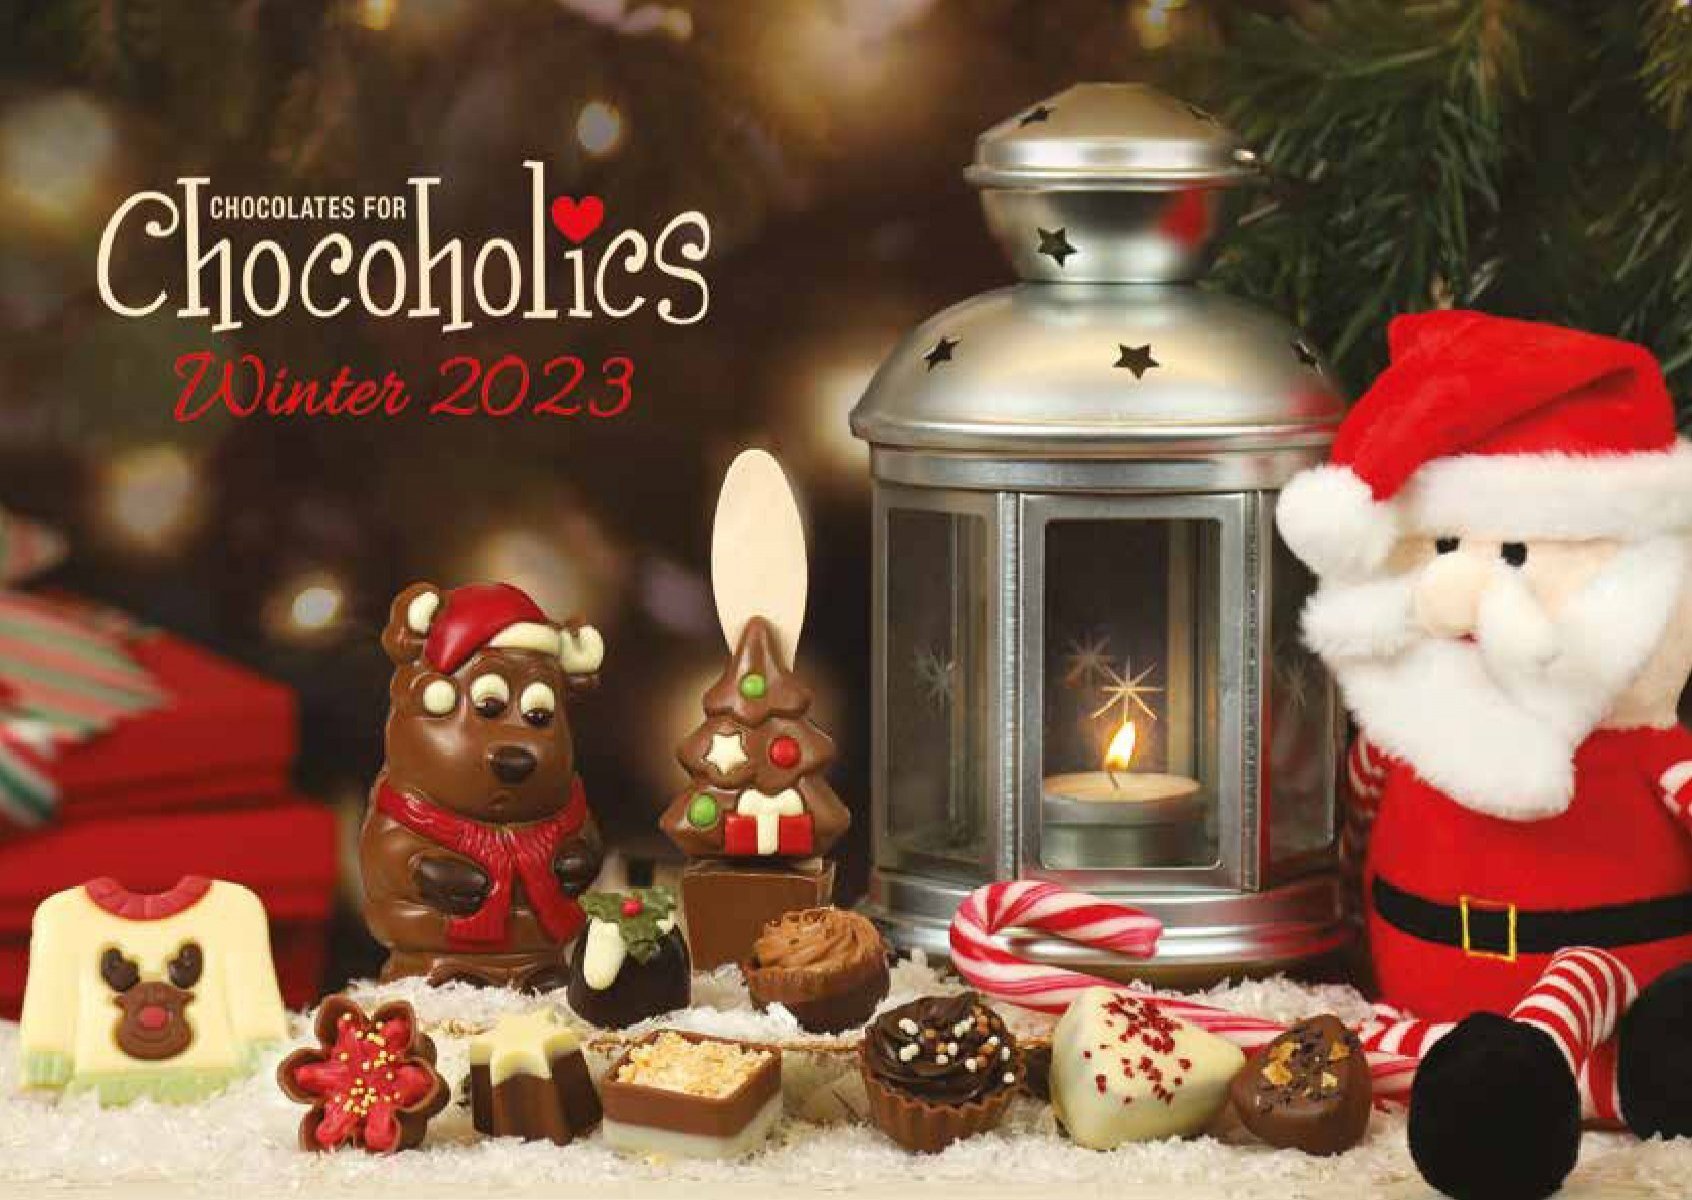 Chocoholics For Chocoholics Winter 2023 Brochure